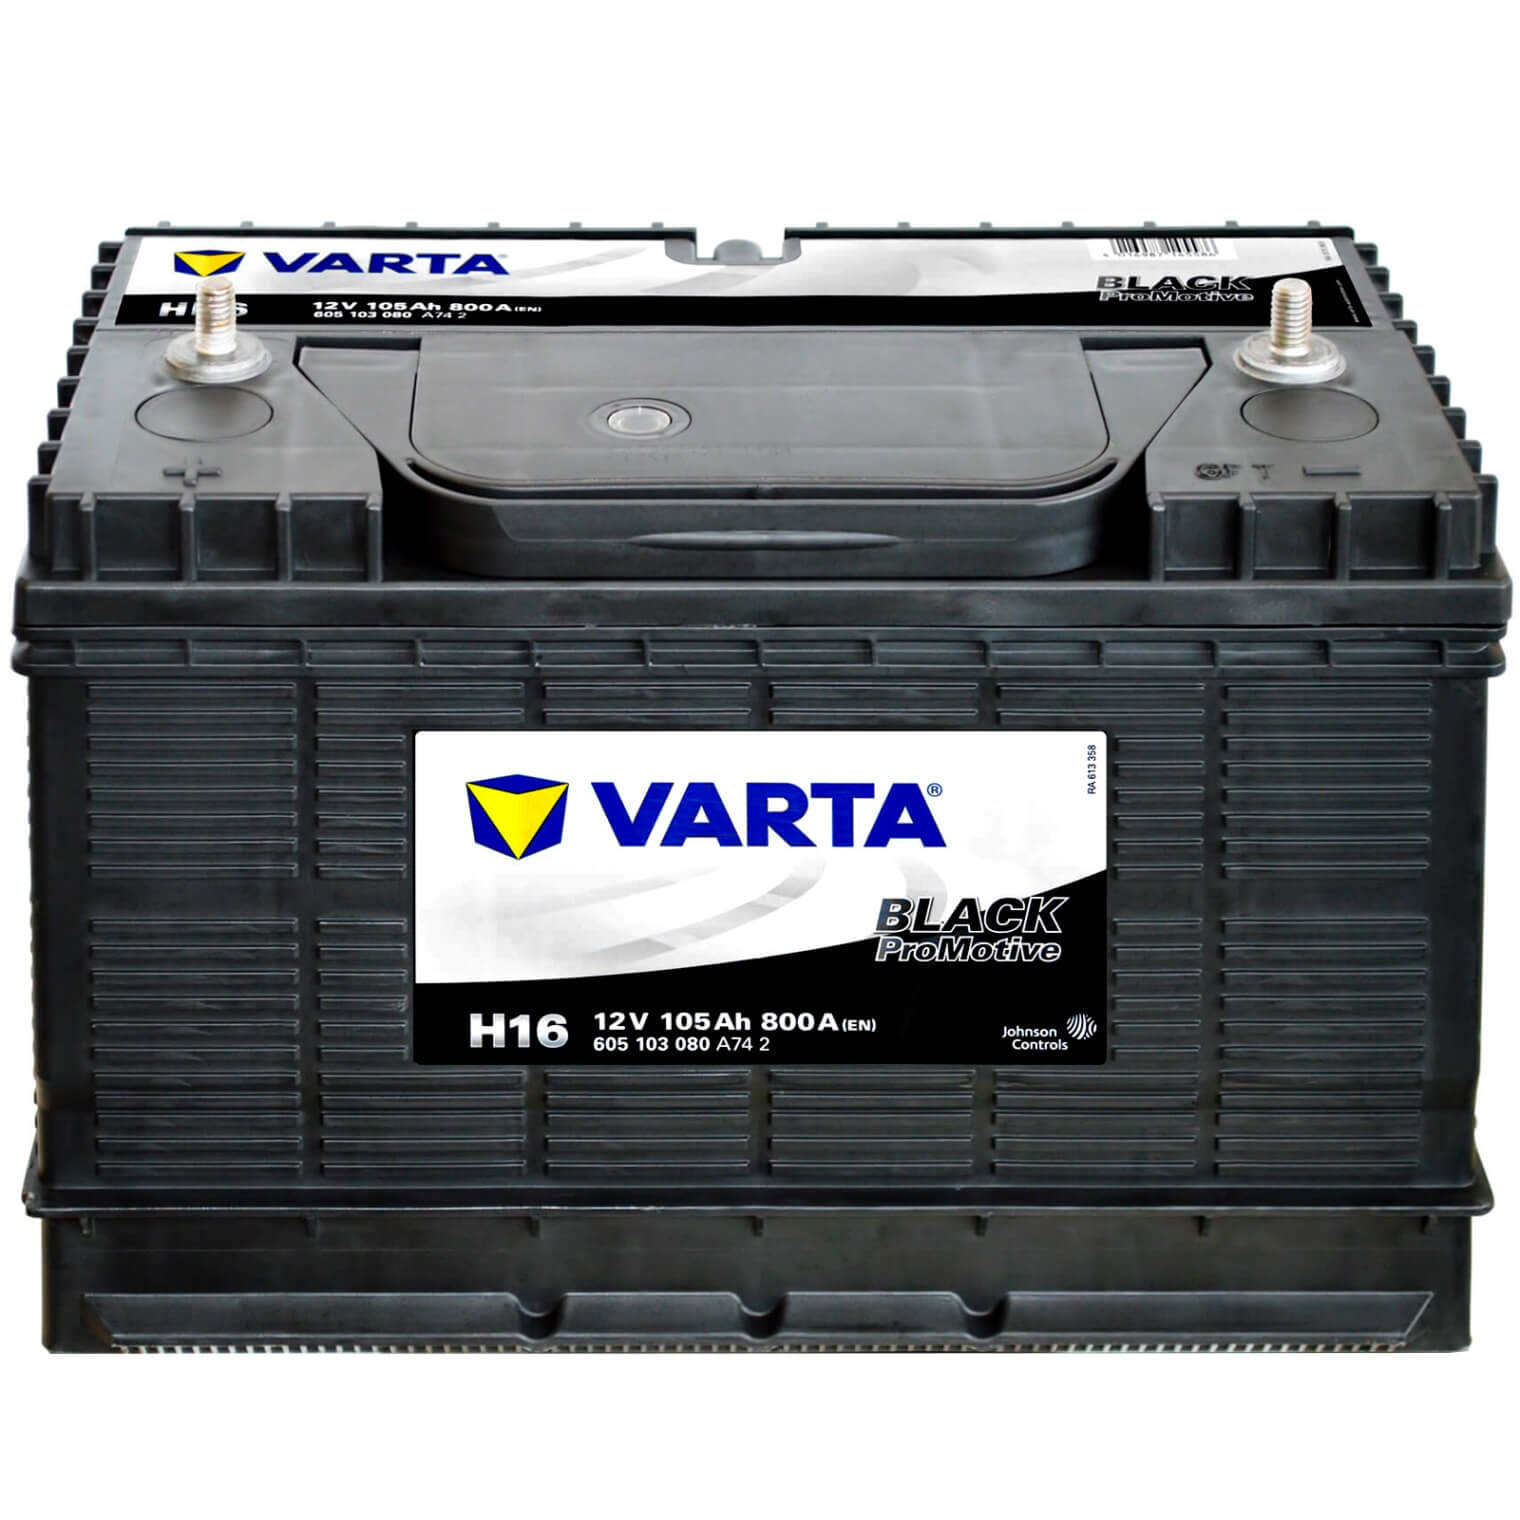 Varta H16 Promotive Black 12V 105Ah 800A/EN